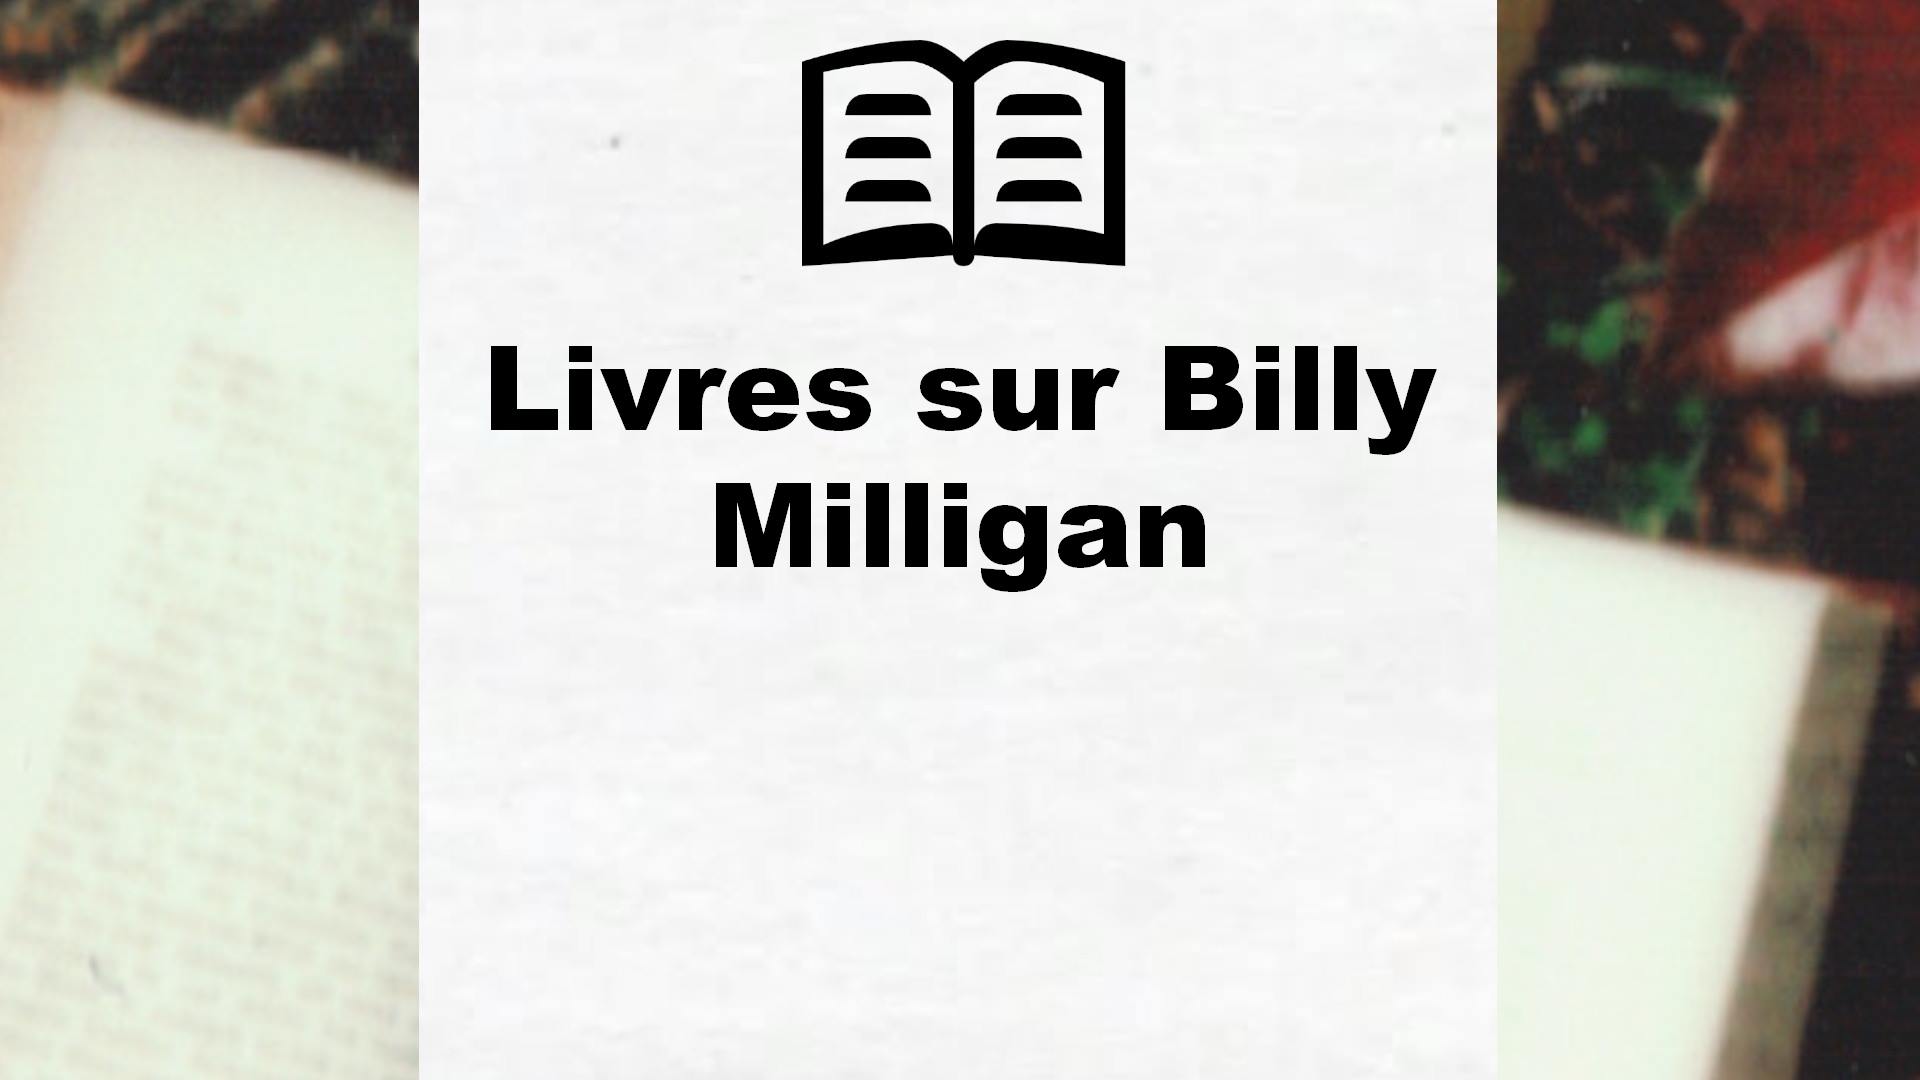 Livres sur Billy Milligan